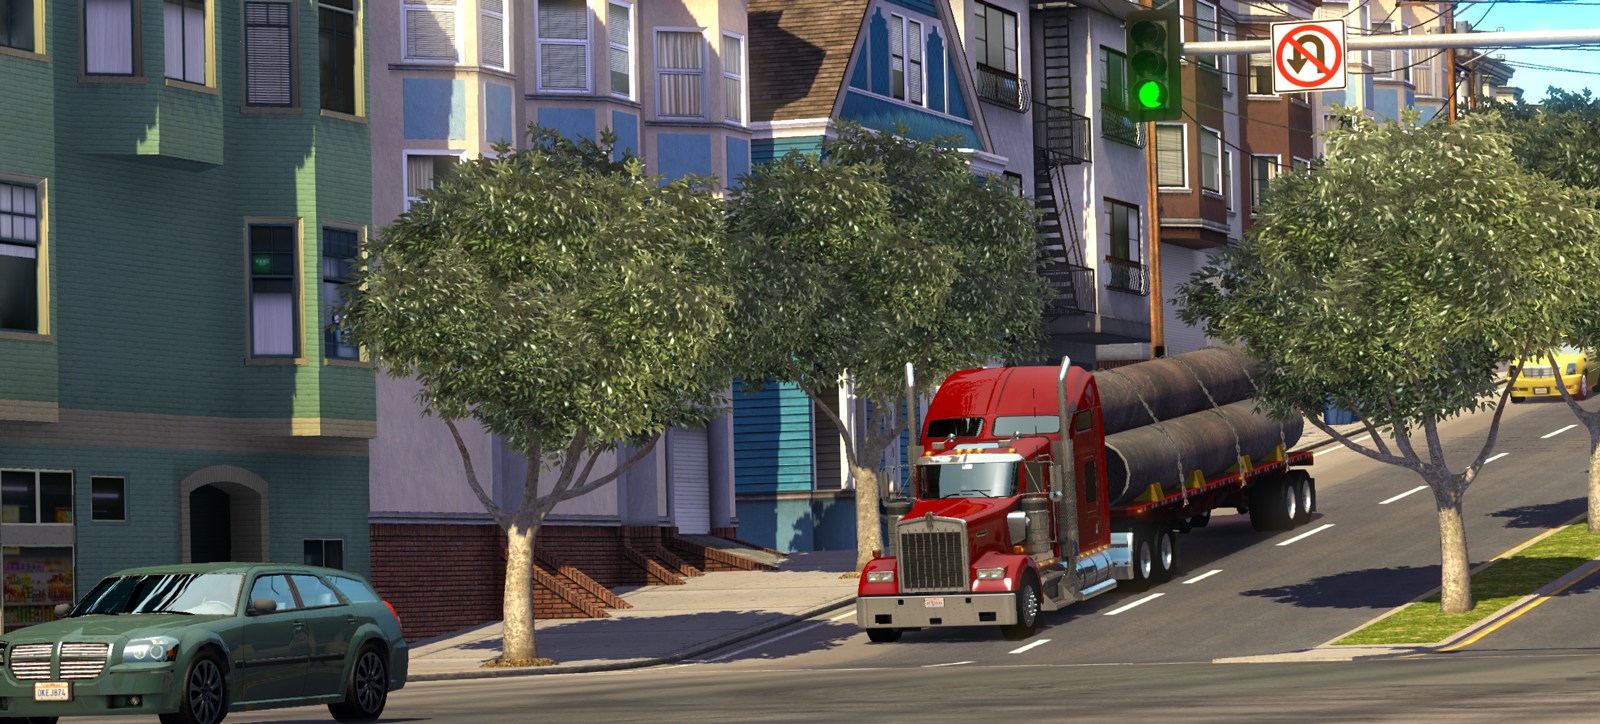 American Truck Simulator 2018 Full Version for PC